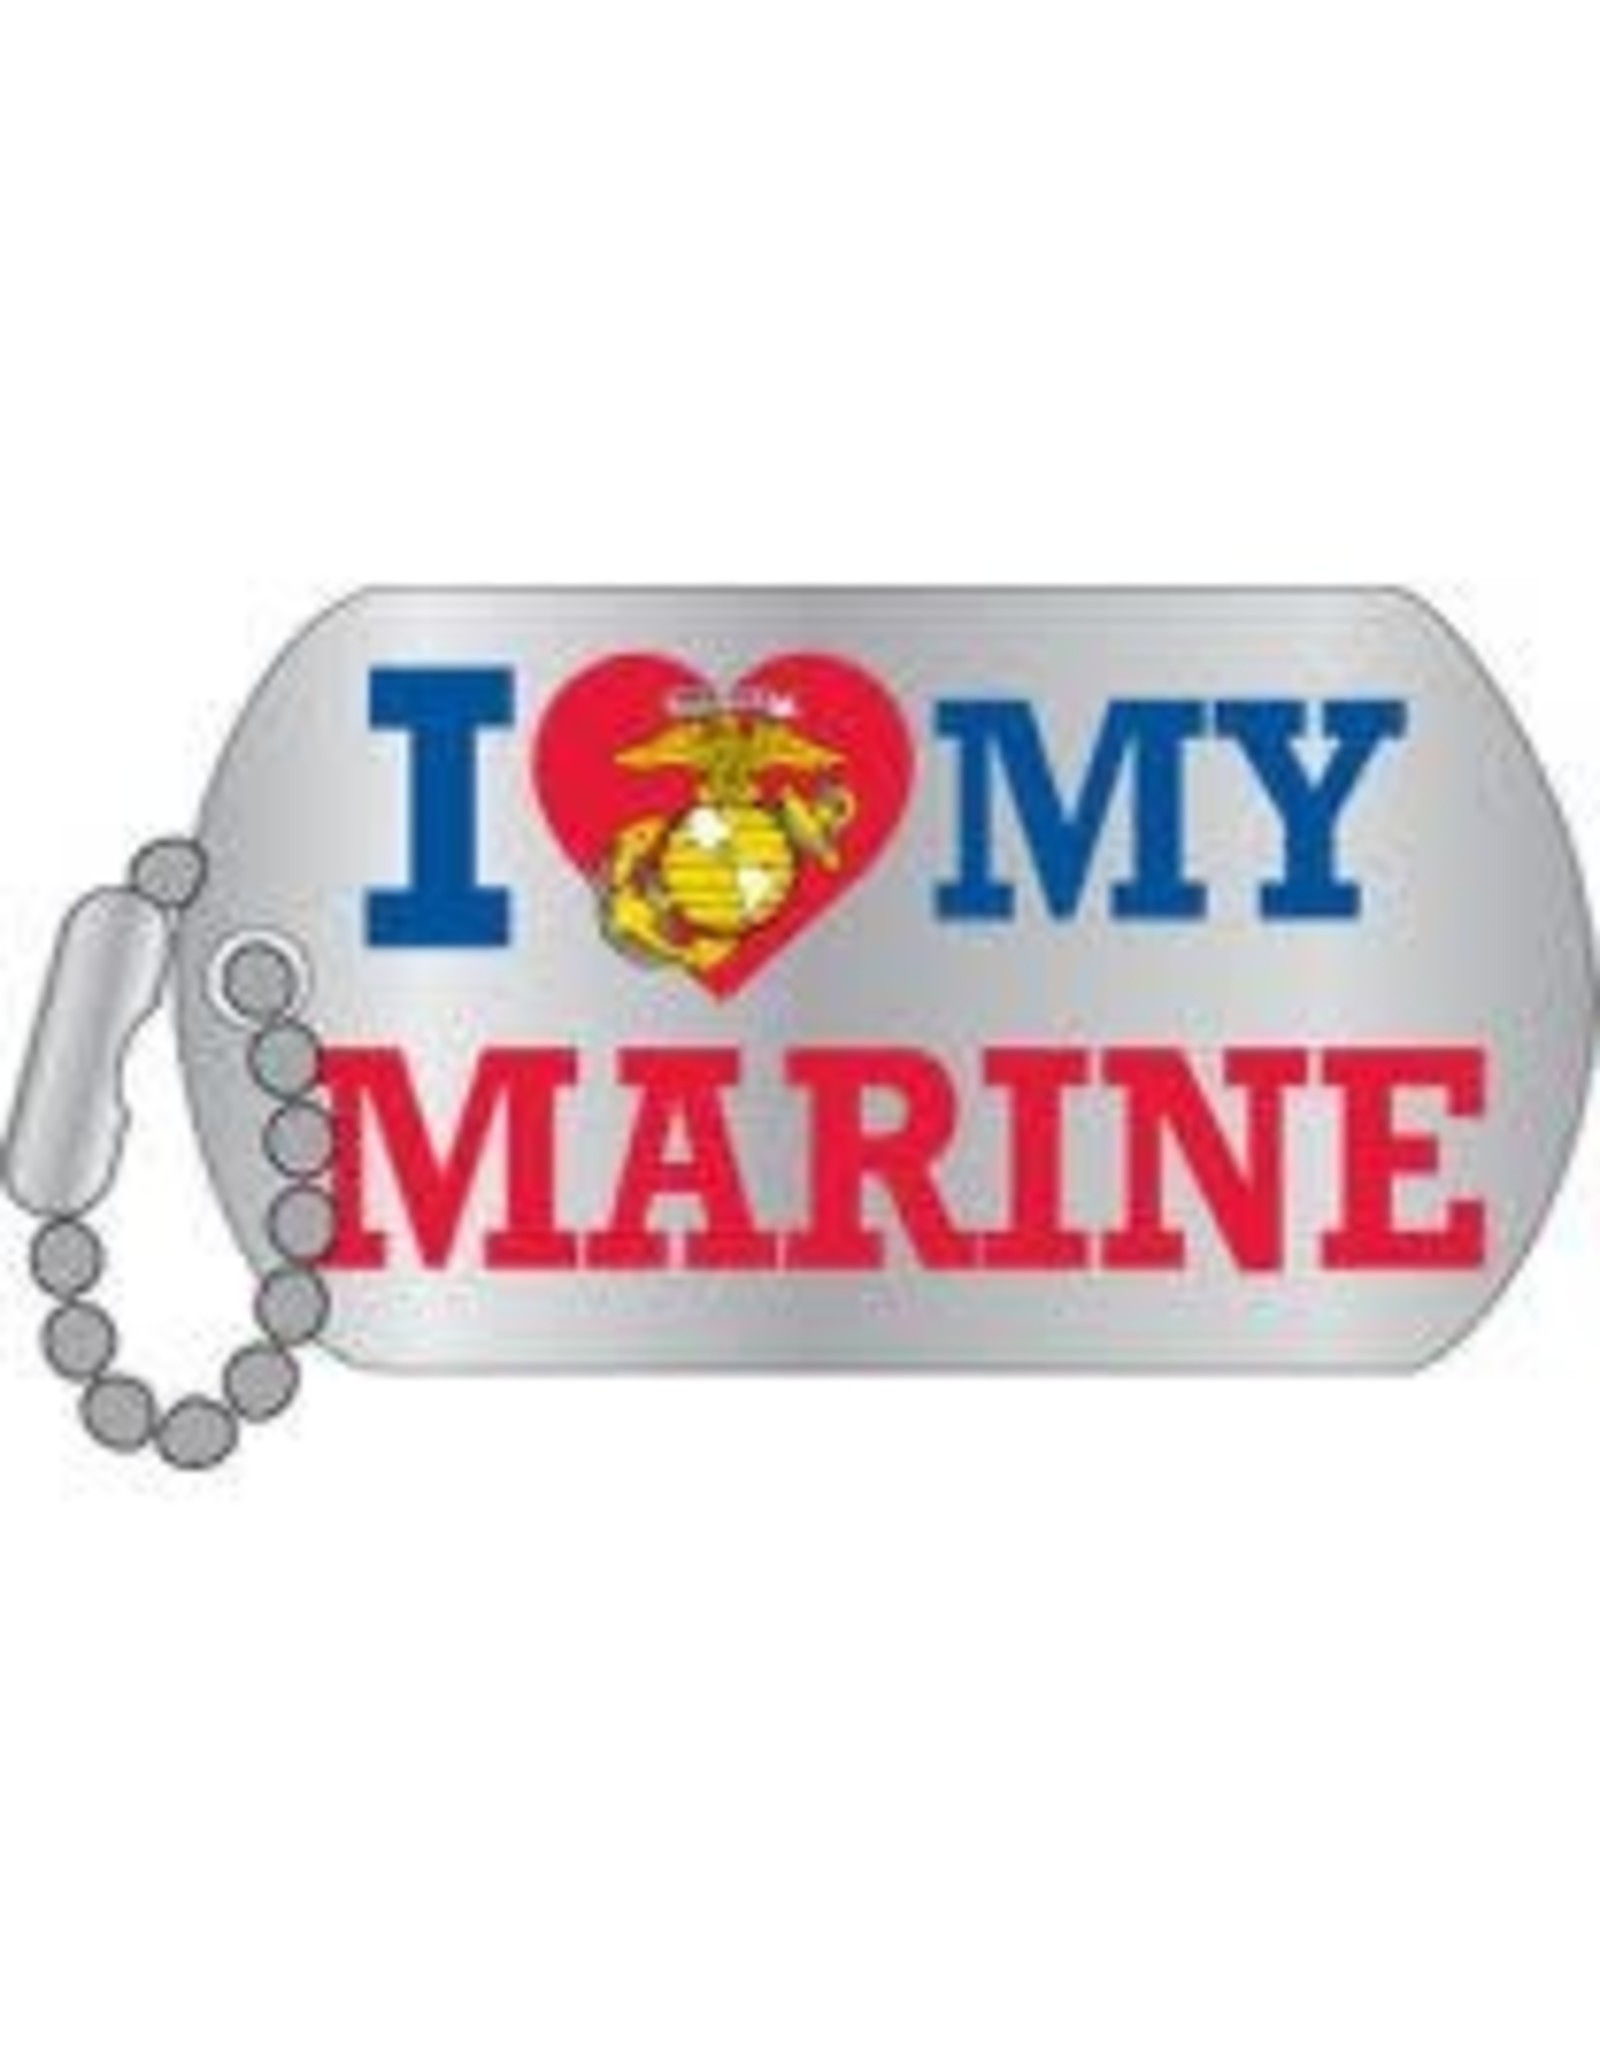 Pin - USMC I Love My Marine